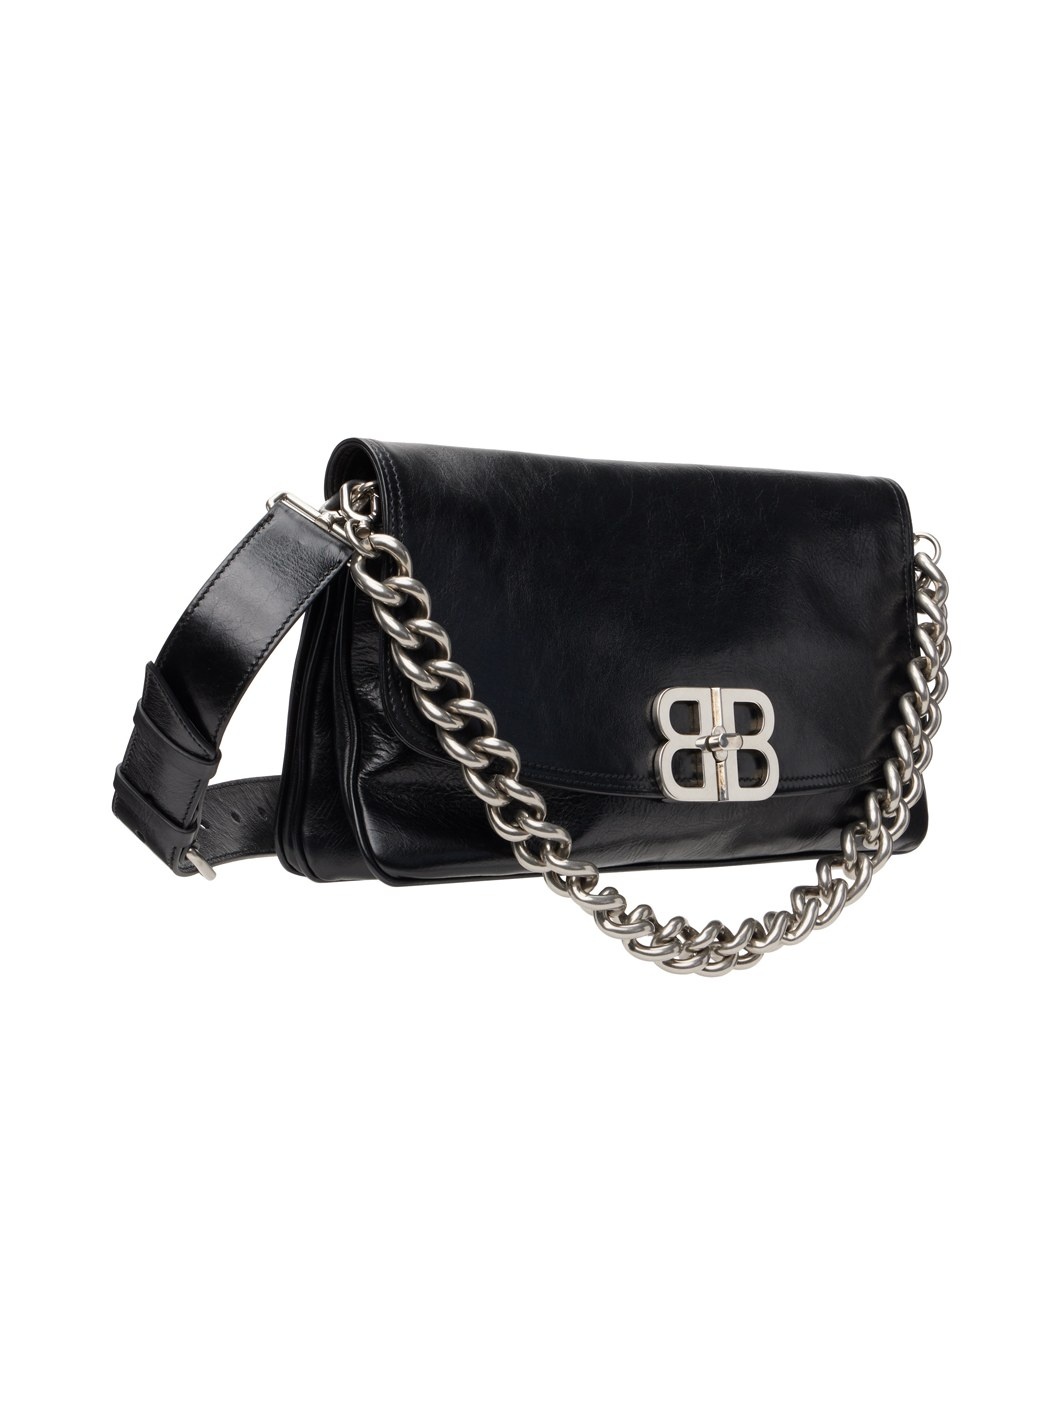 Balenciaga Bb Soft Flap Leather Shoulder Bag in Black